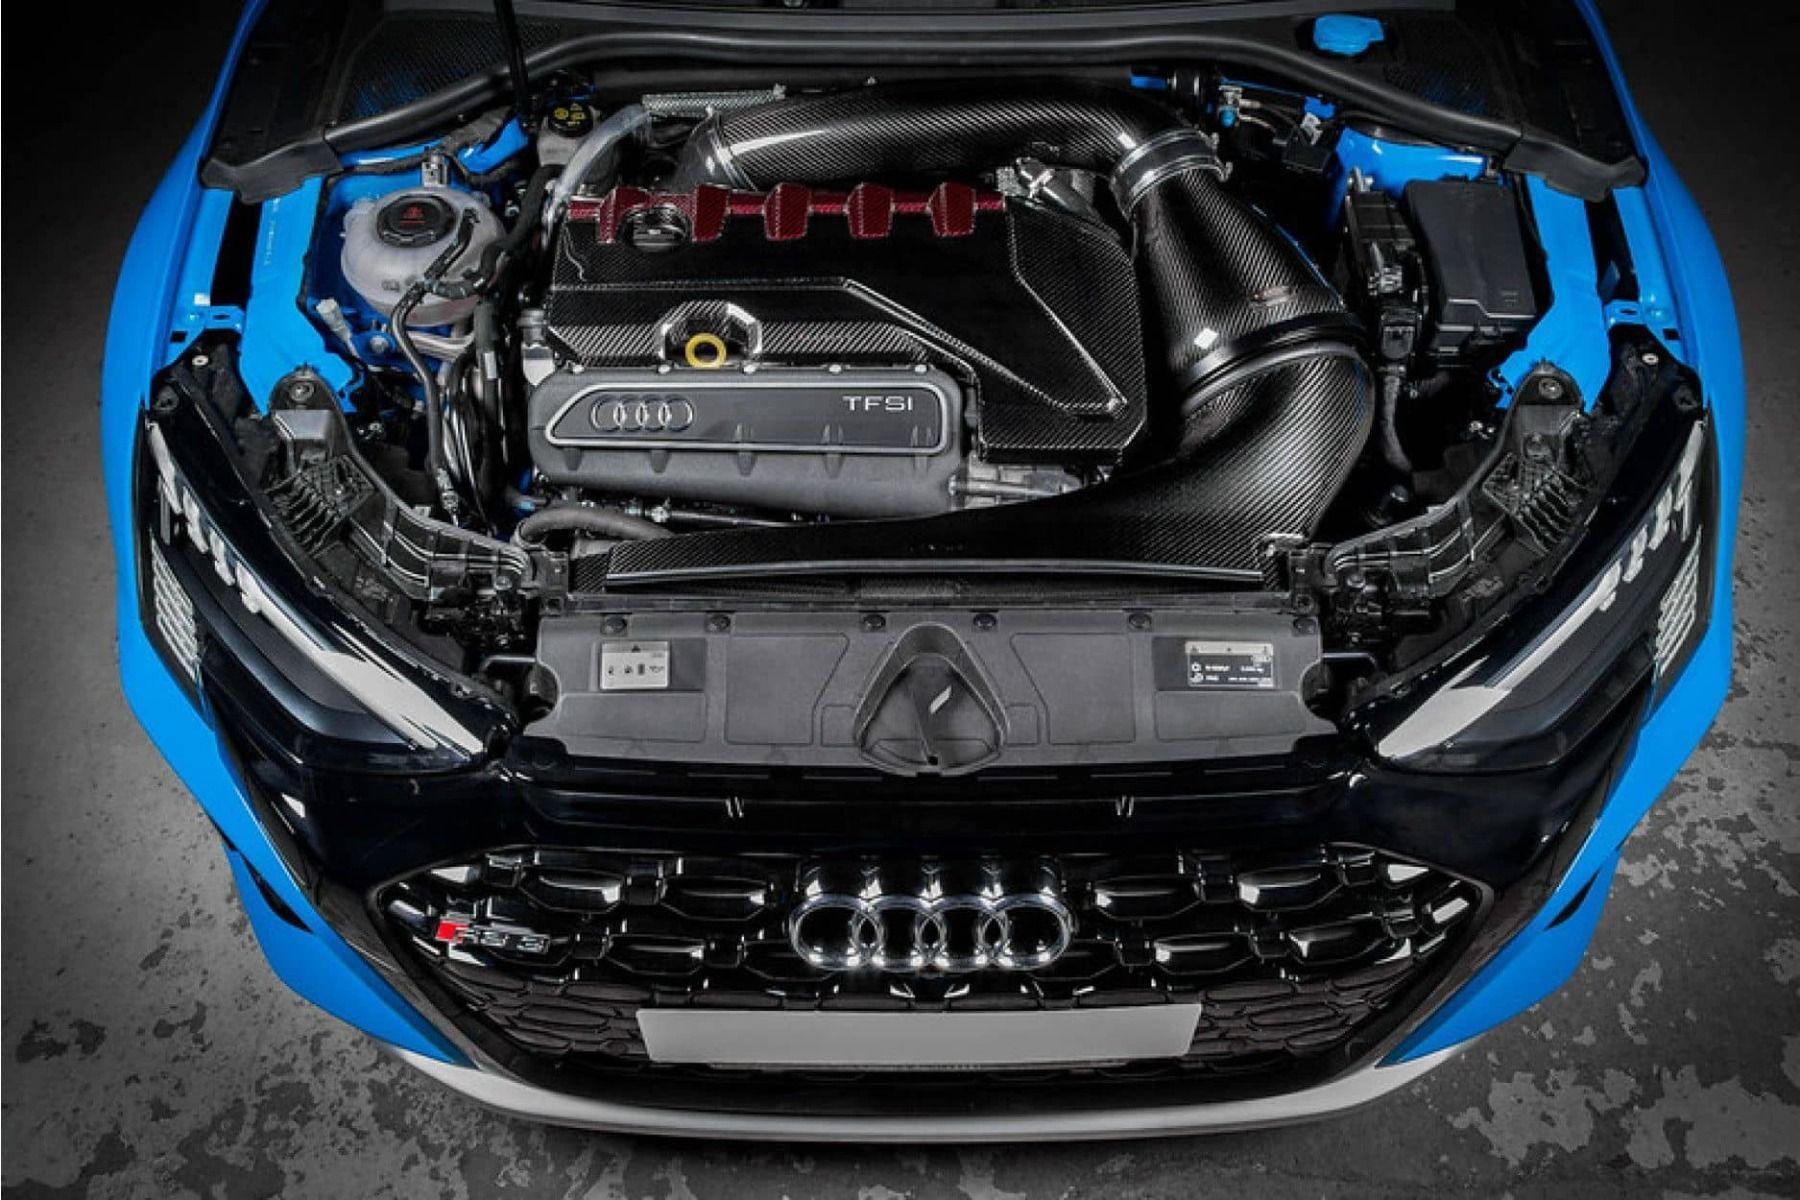  Eventuri Carbon Ansaugsystem für Audi RS3 8Y